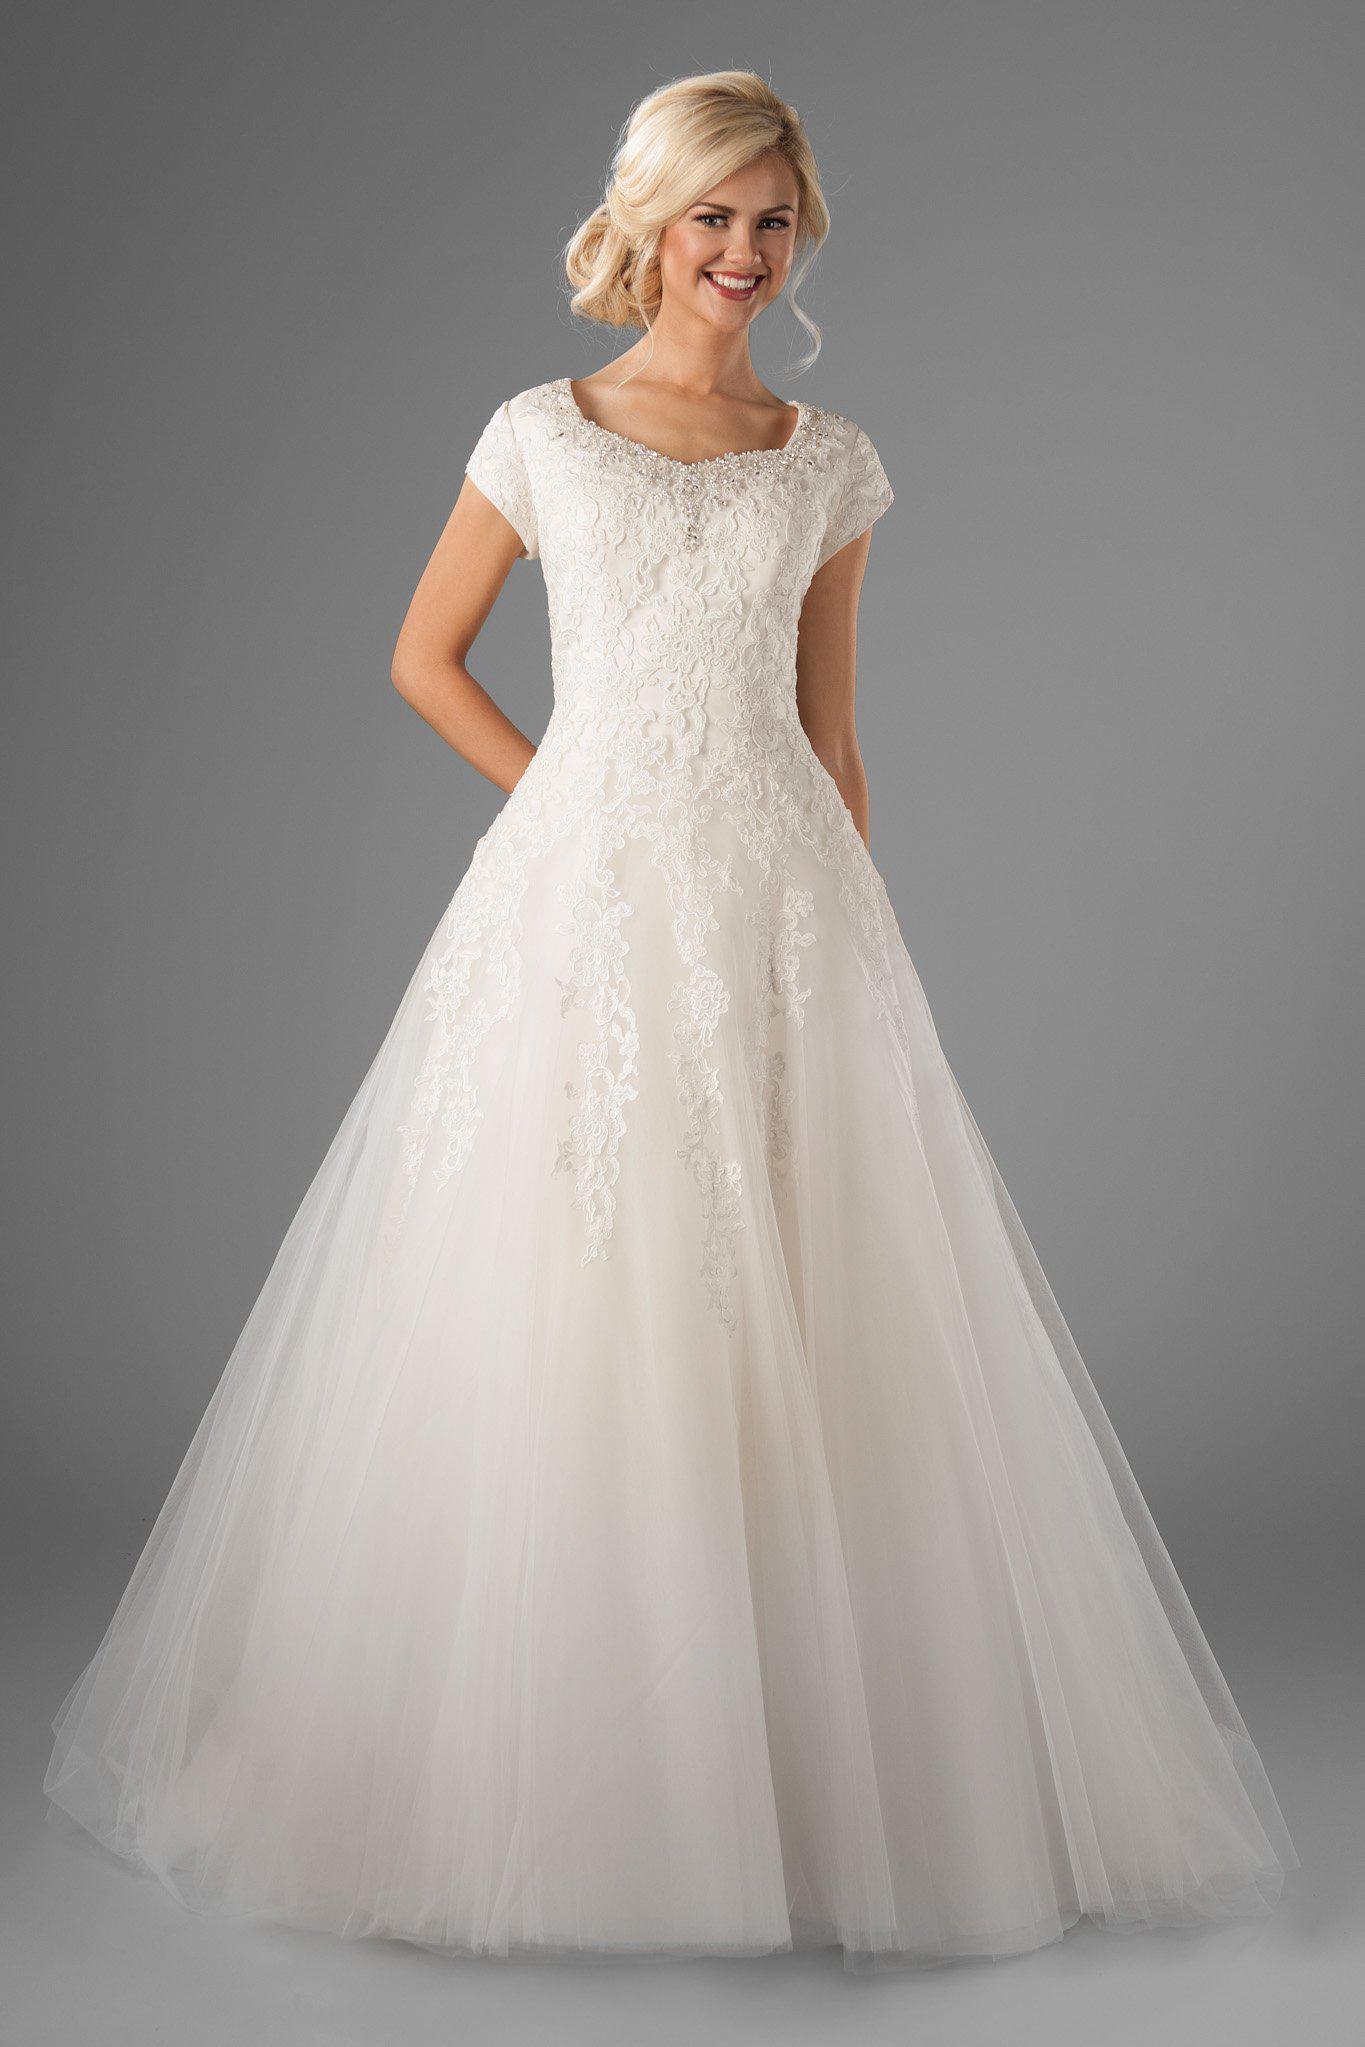 Modest ballgown wedding dress, style Juniper, is part of the Wedding Collection of LatterDayBride, a Salt Lake City bridal shop.